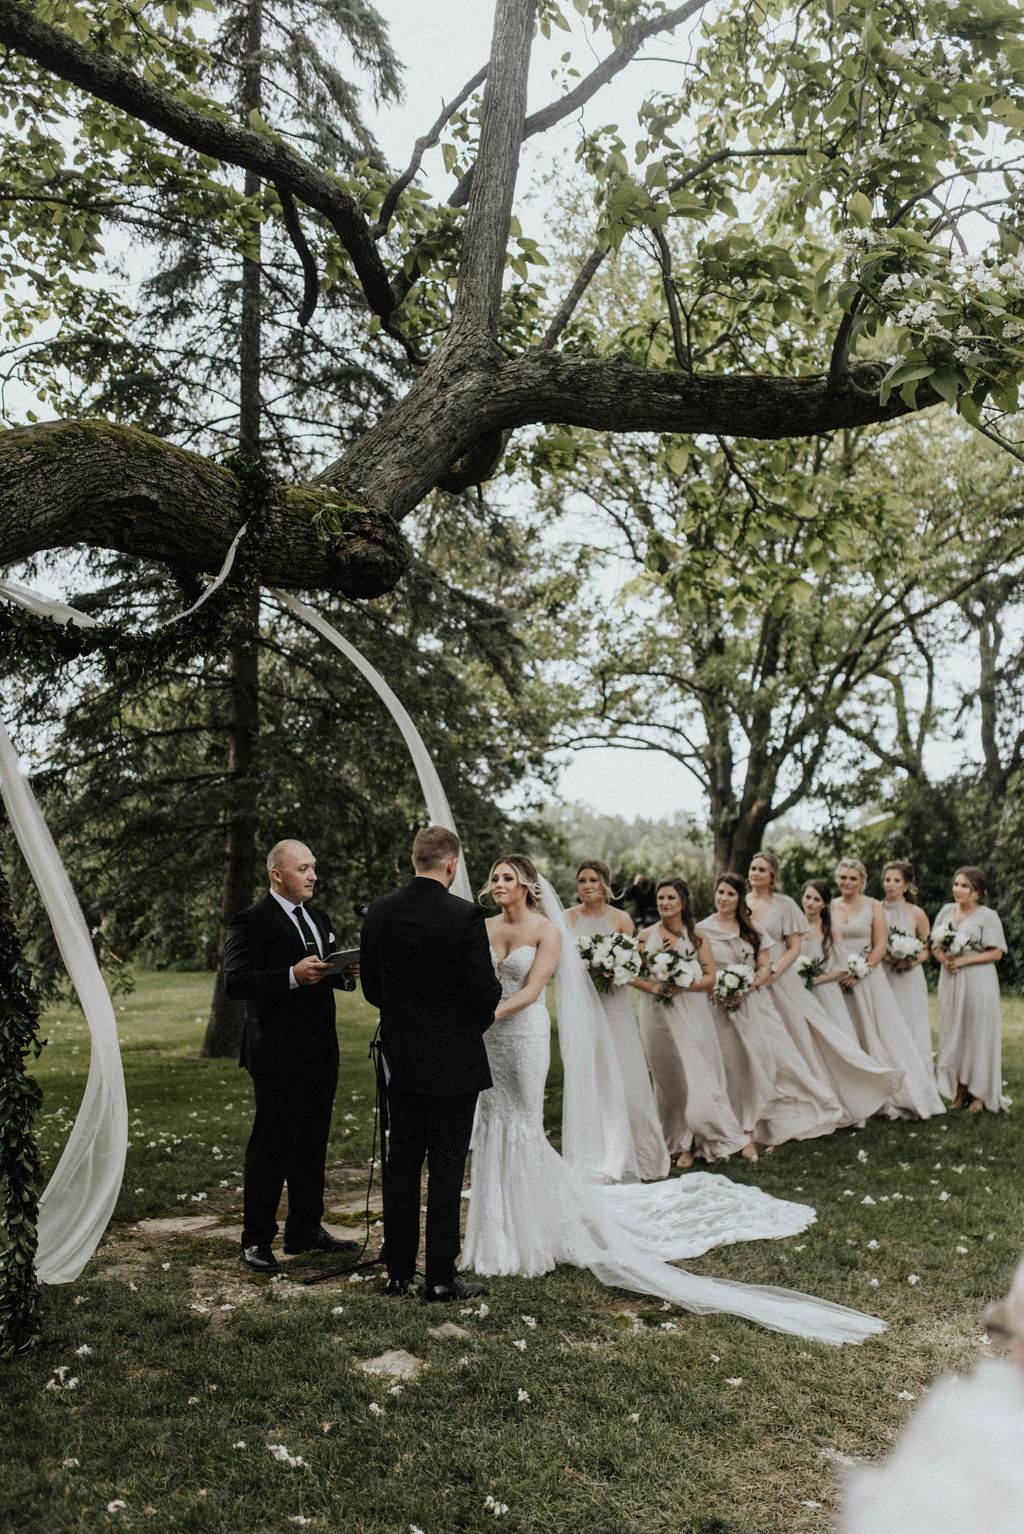 An outdoor ceremony during a Hidden Vineyard Wedding Barn wedding.